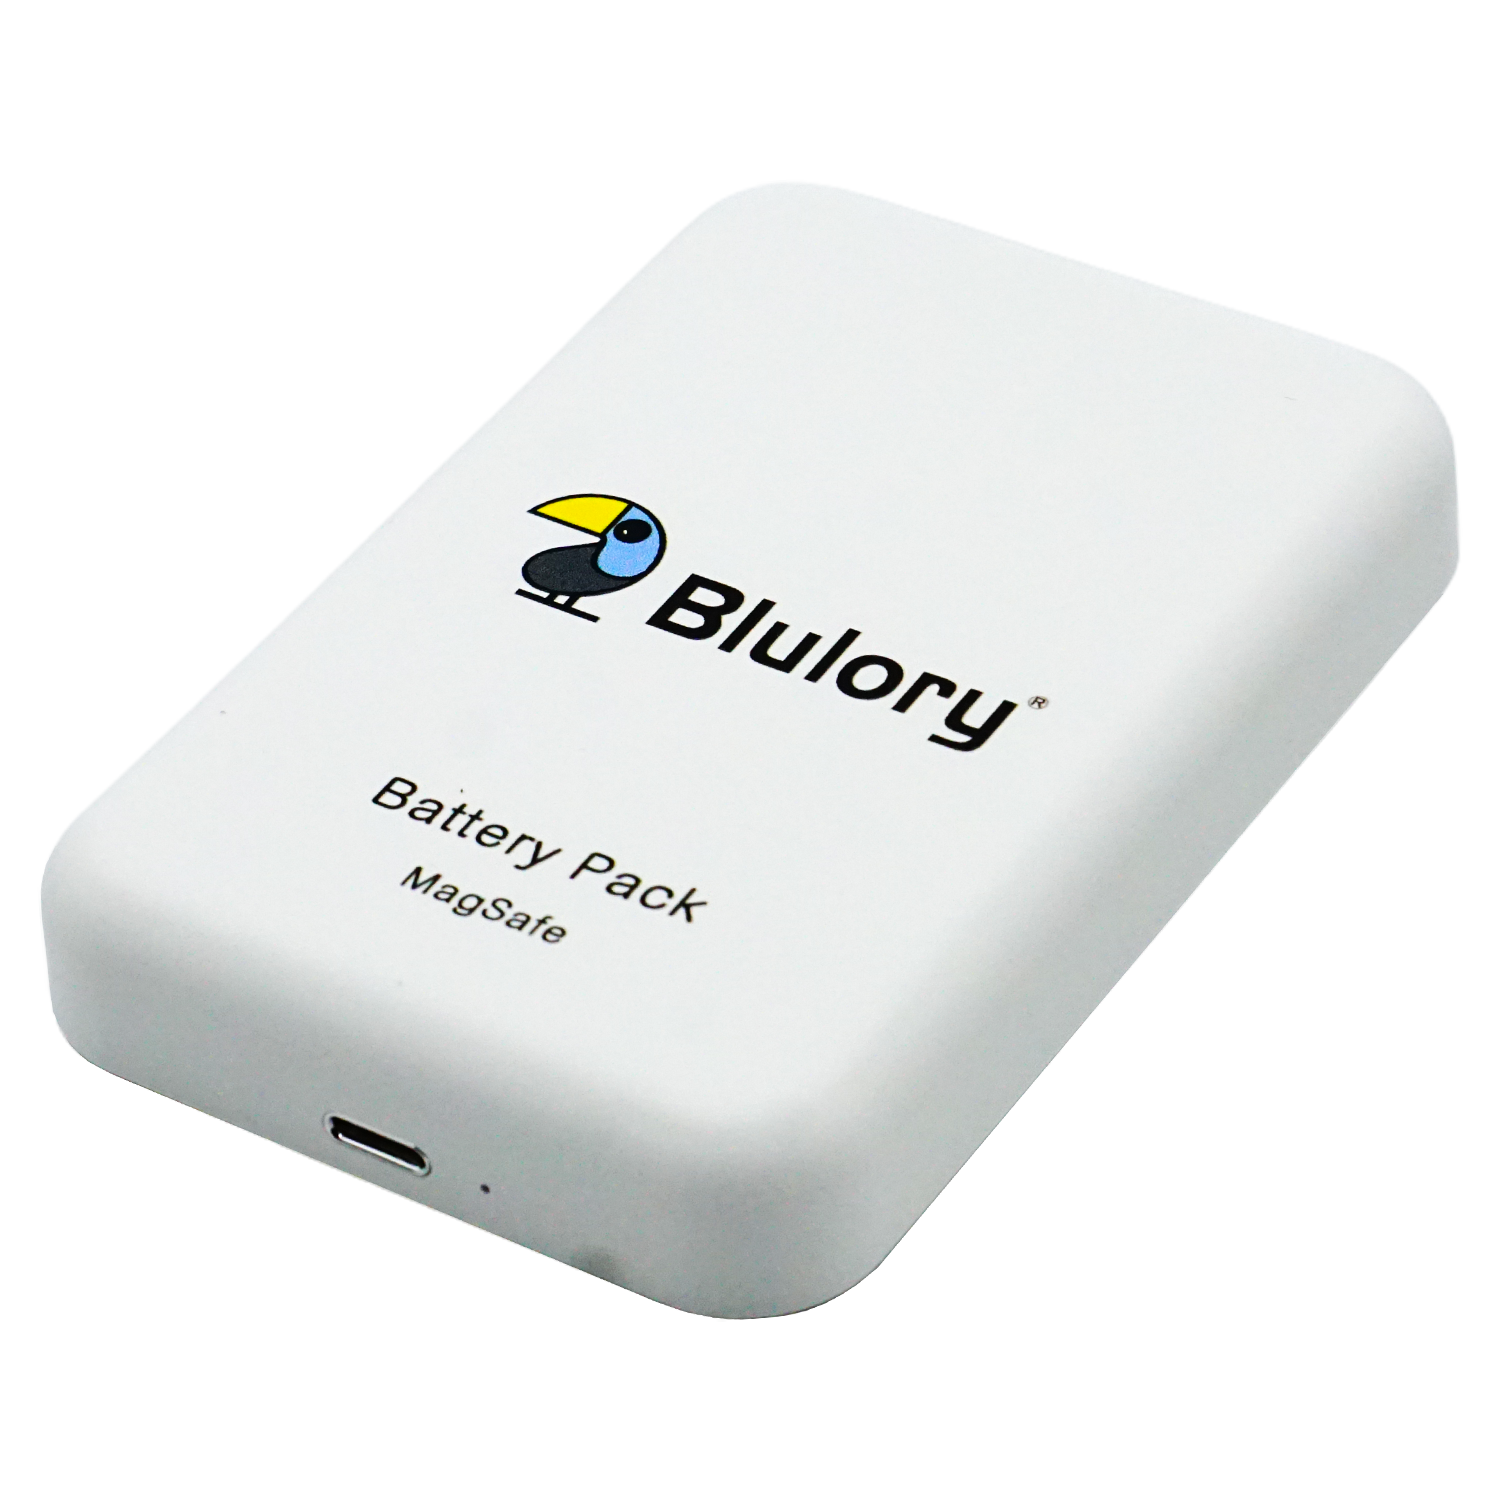 Carregador Portátil Magsafe Blulory Battery Pack 5000mAh - Branco